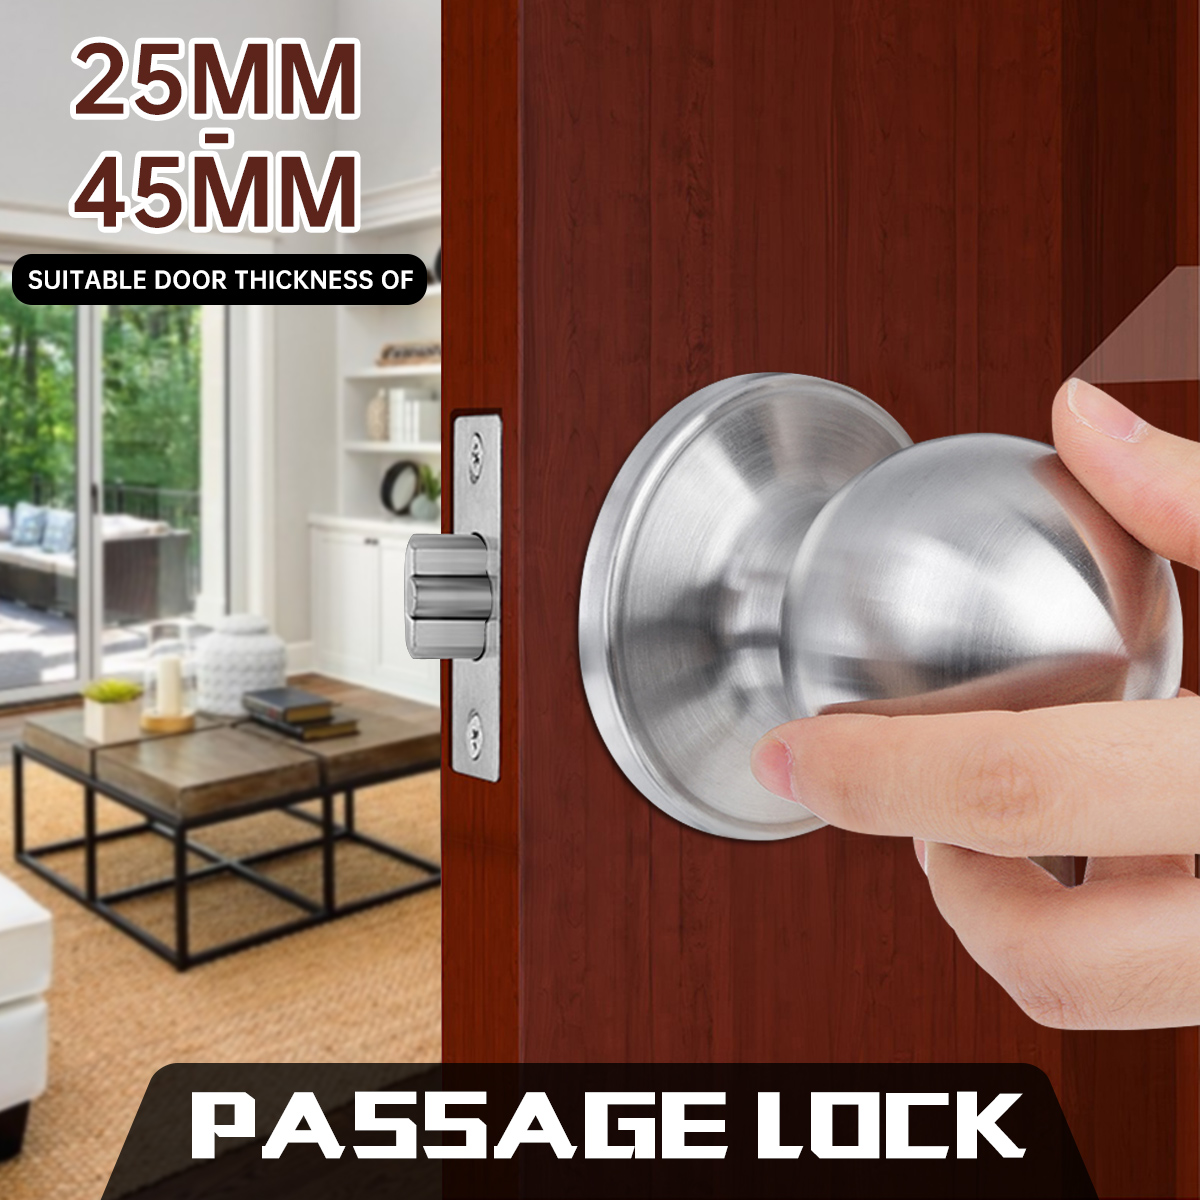 Stainless-Steel-Bathroom-Round-Ball-Door-Knob-Set-Handle-Passage-Lock-With-Key-1029757-1